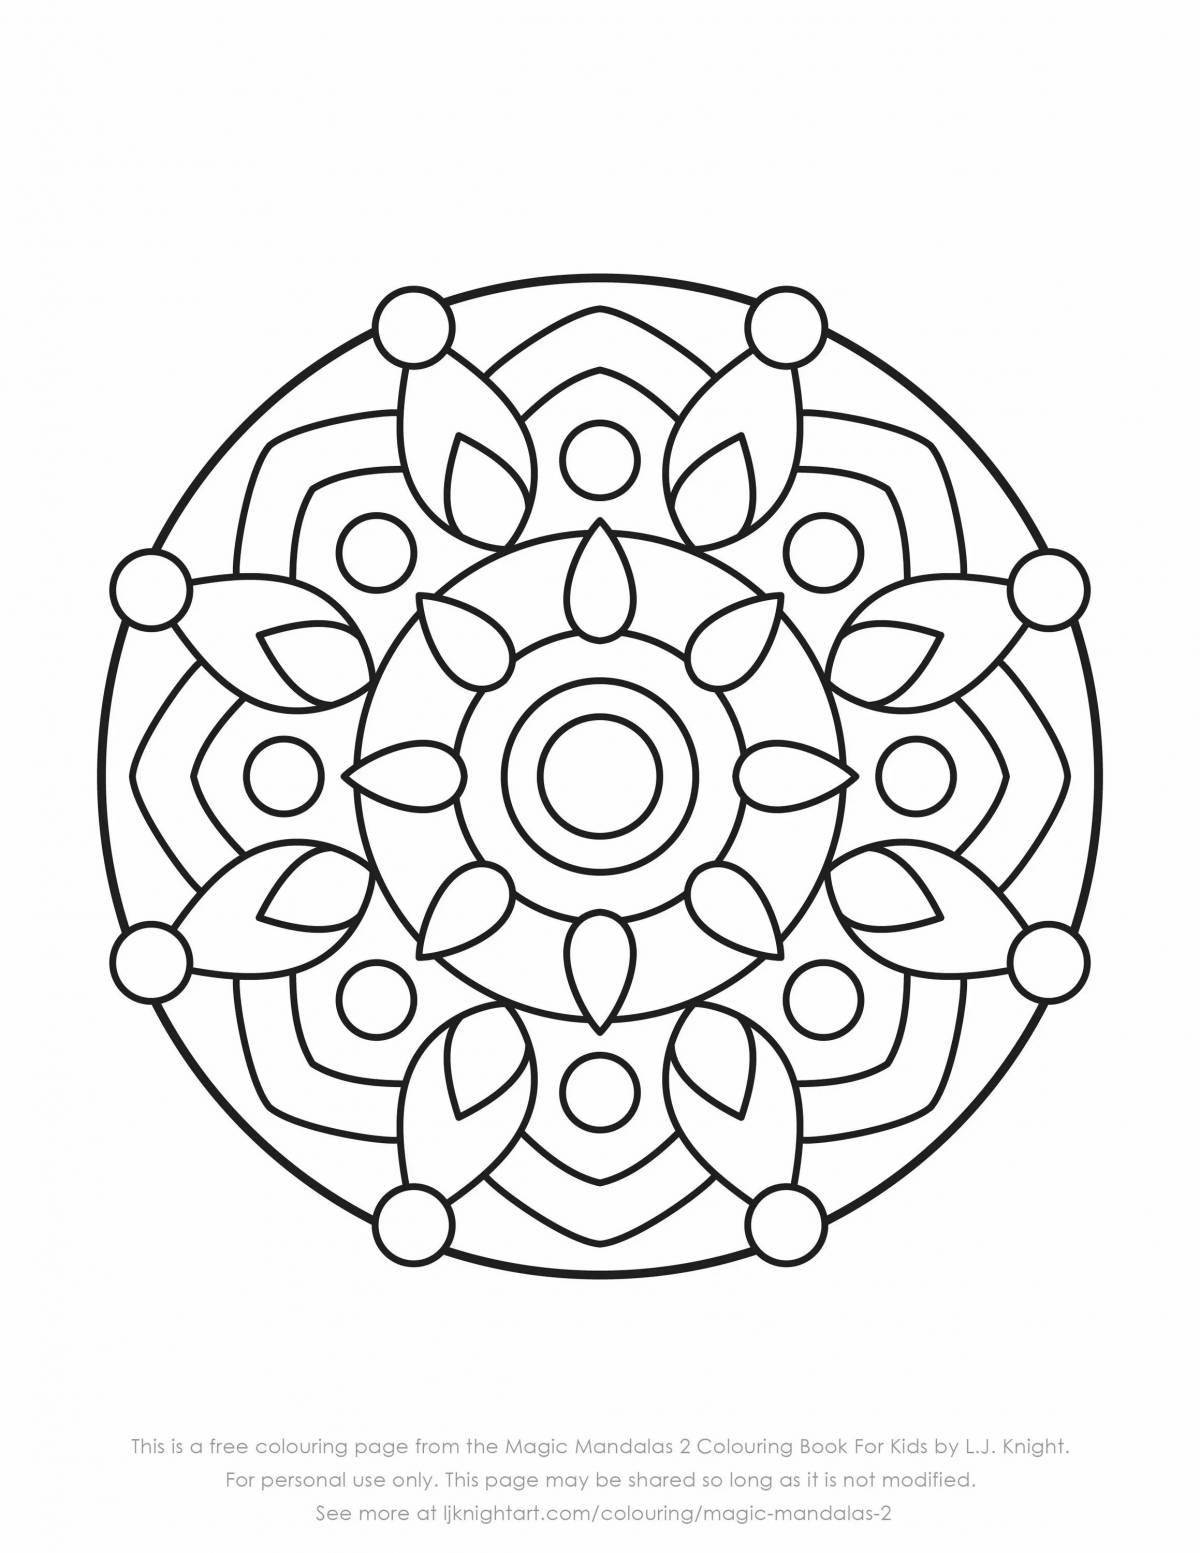 Mandala for children 10 years old #3